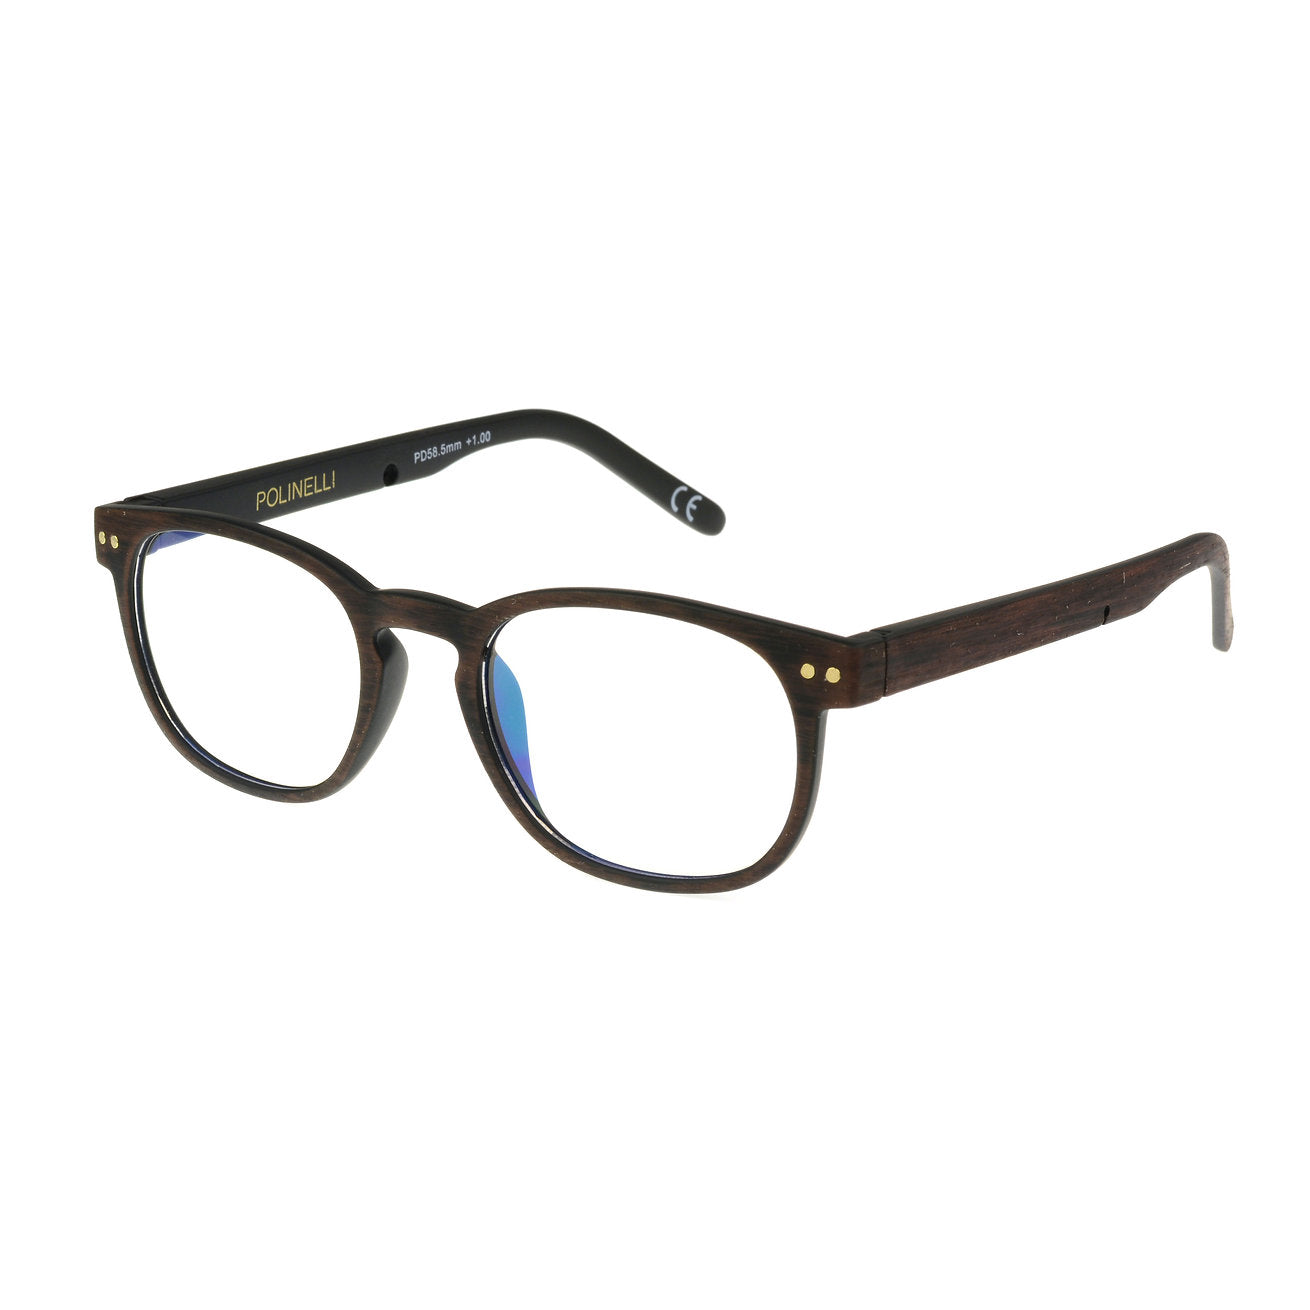 Polinelli eyeglasses model P301 brown